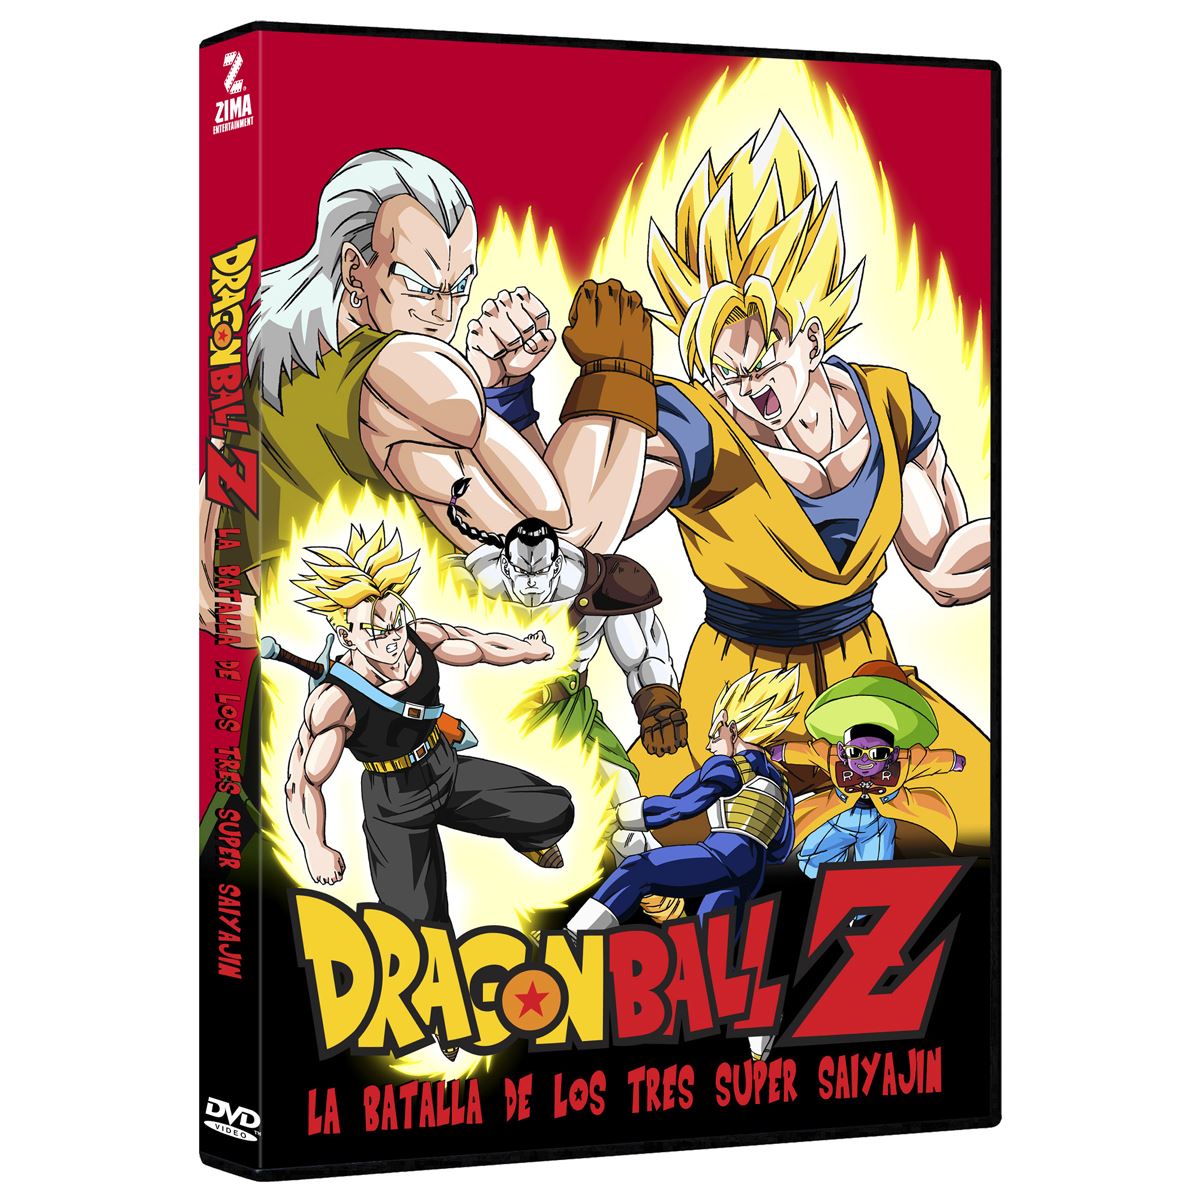 DVD Dragon Ball Z: La Batalla de los Tres Super Saiya-Jin